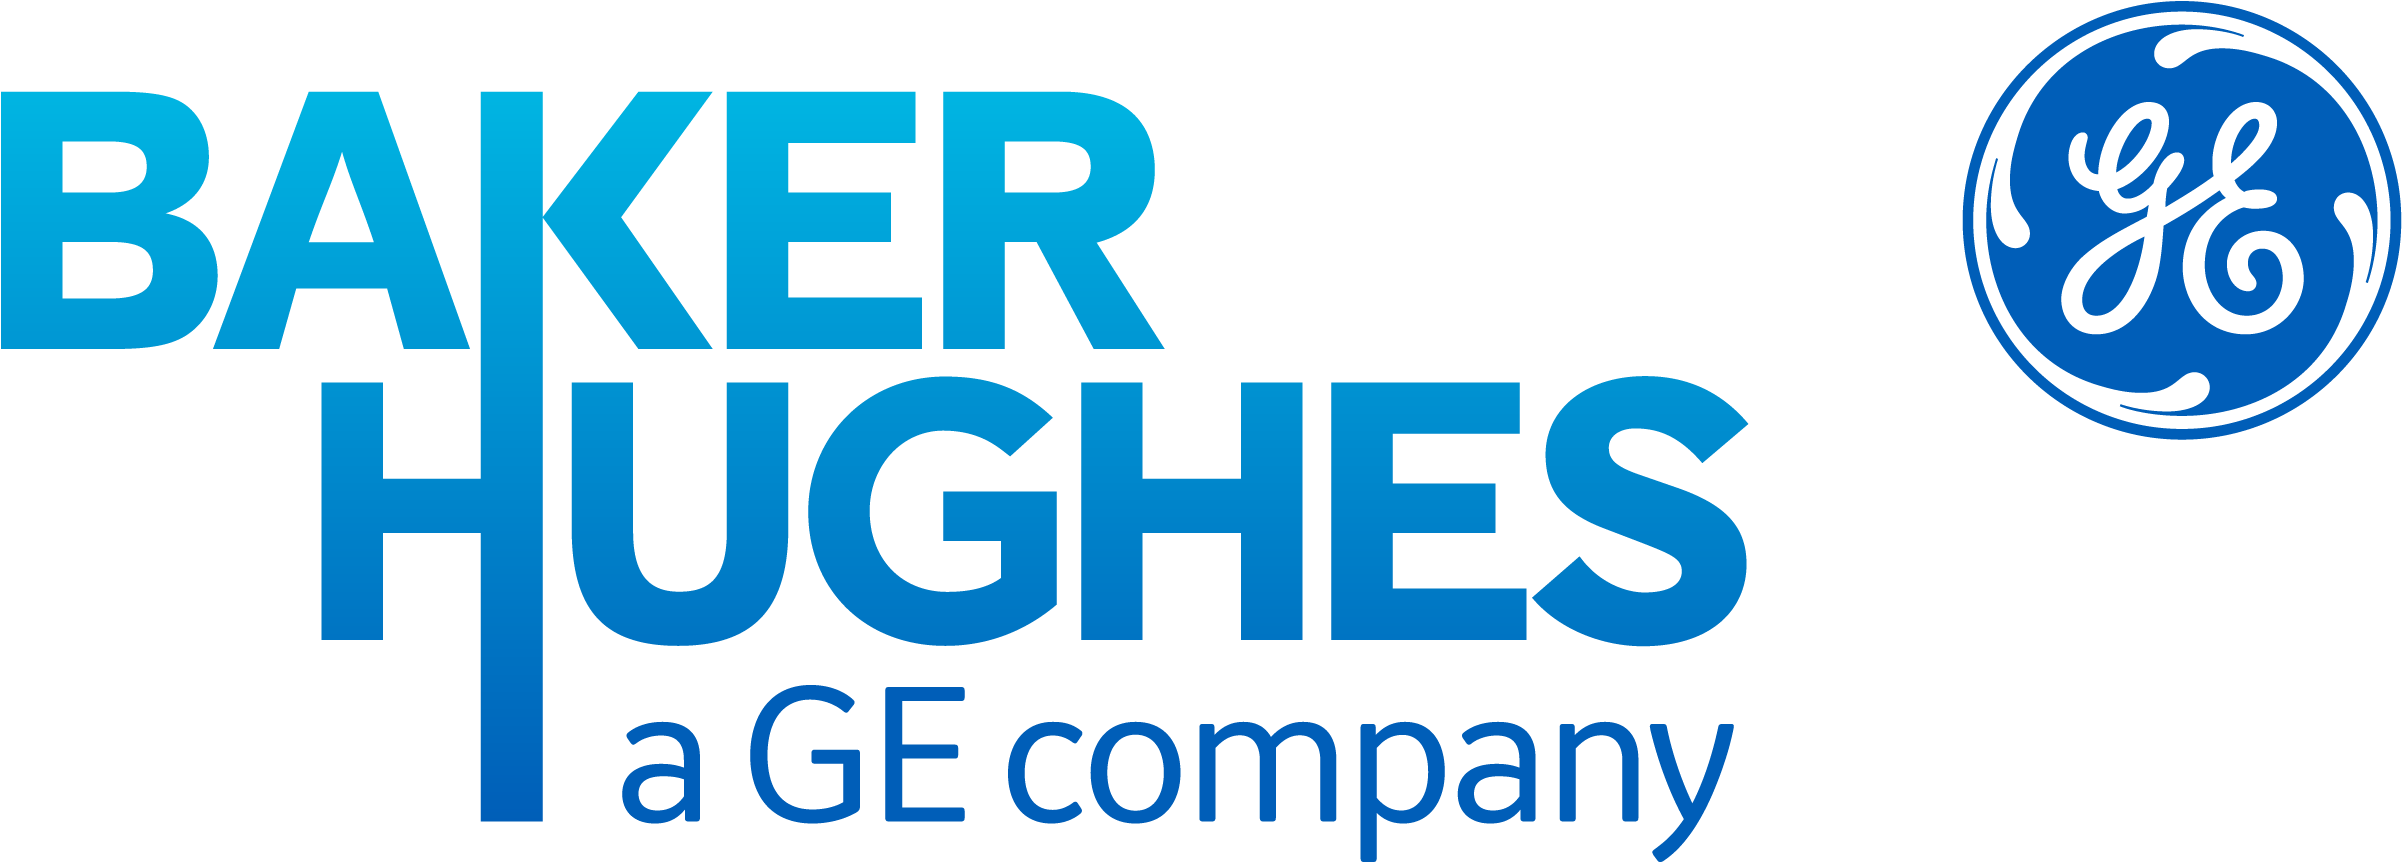 Logo Baker Company Hughes Ge PNG Image